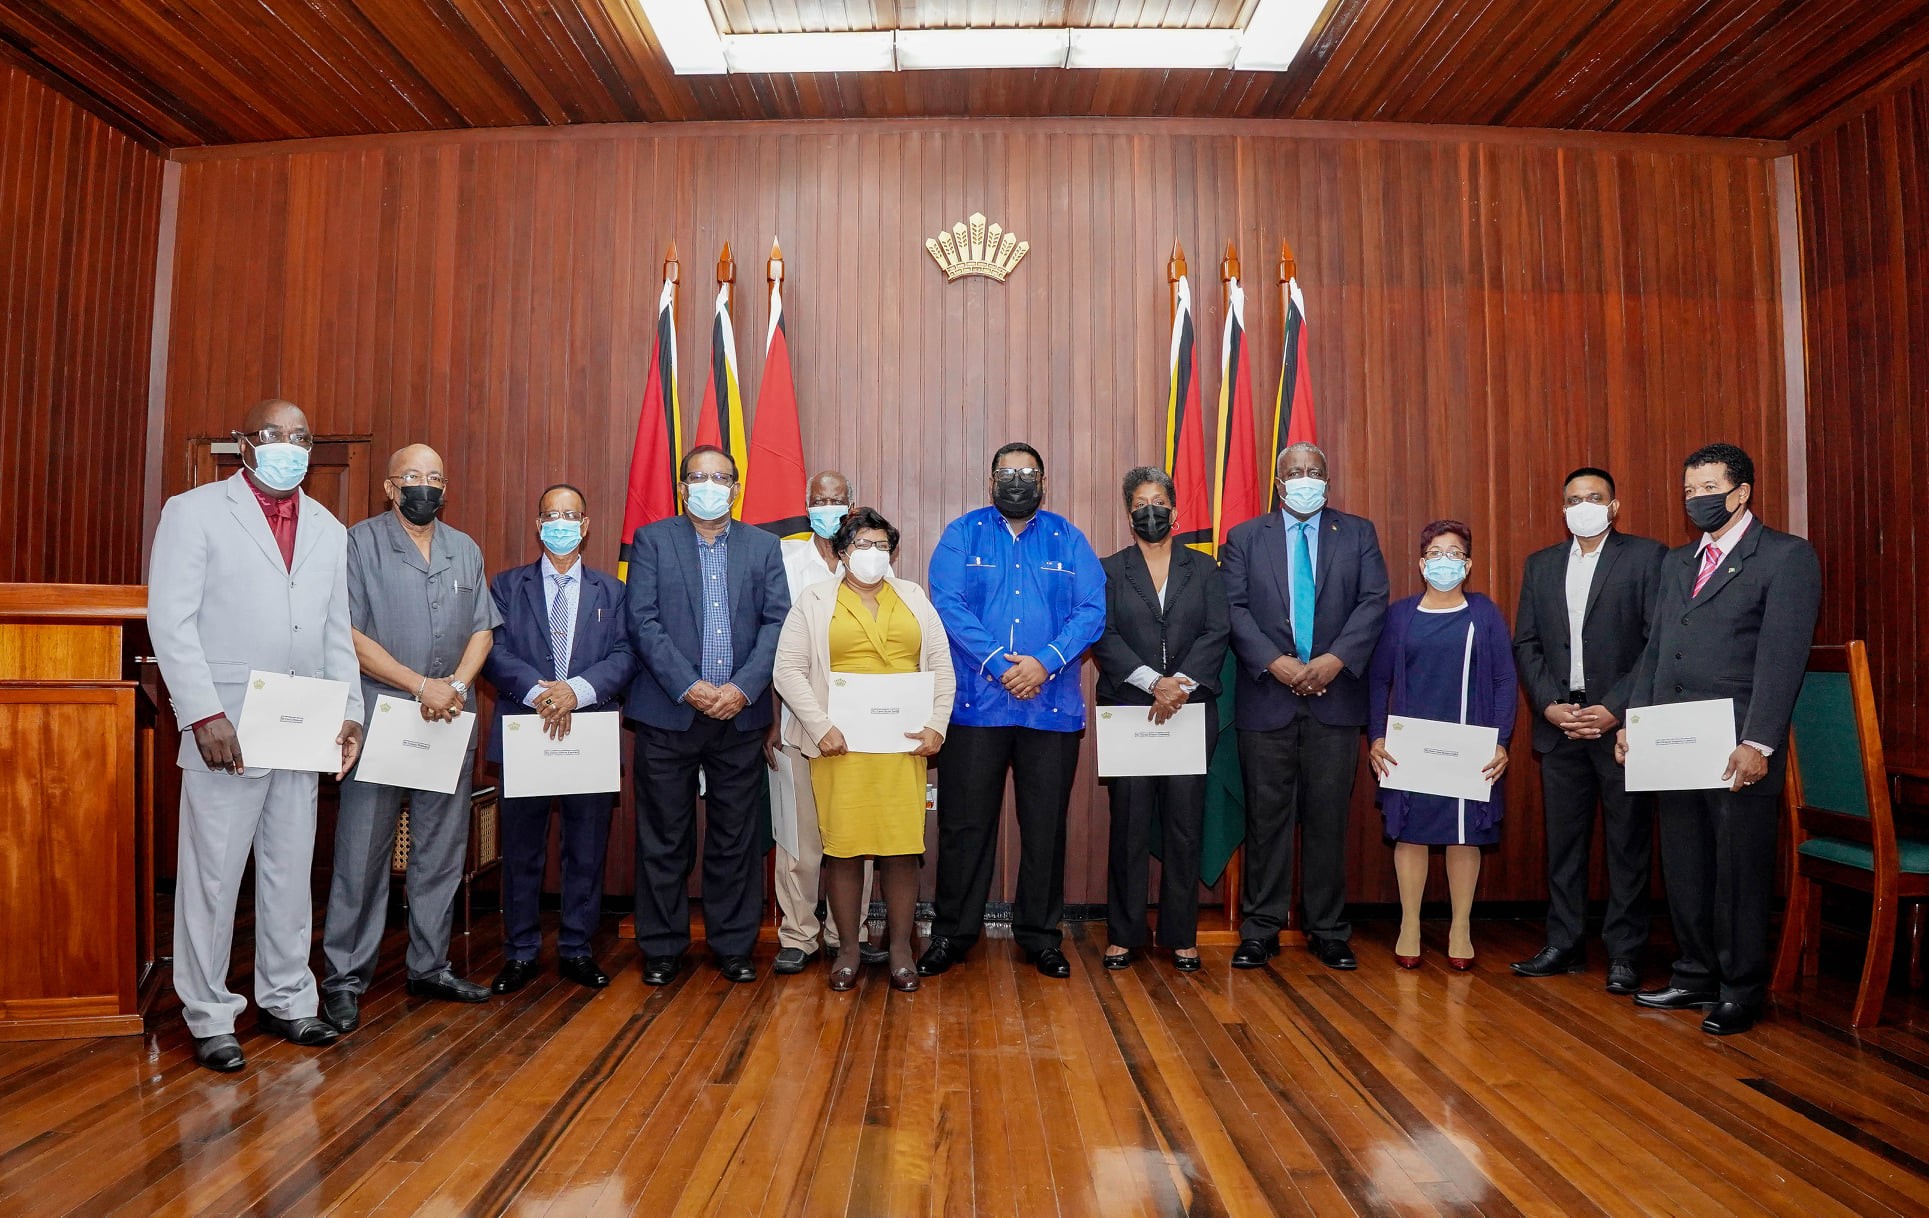 President Irfaan Ali (center) along with the eight LGC members sworn-in